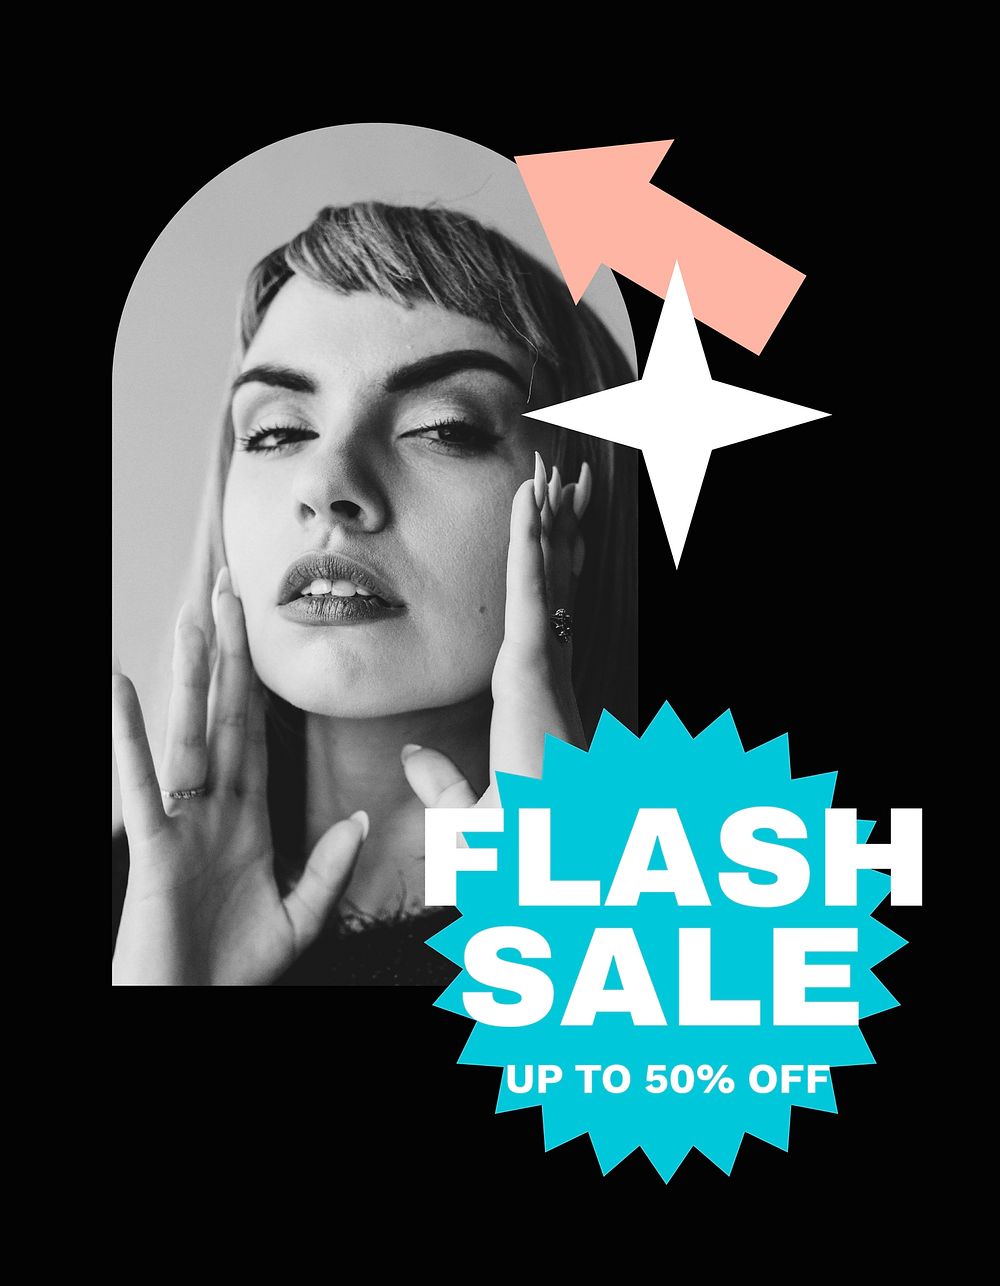 Flash sale flyer editable template, fashion, shopping ad vector